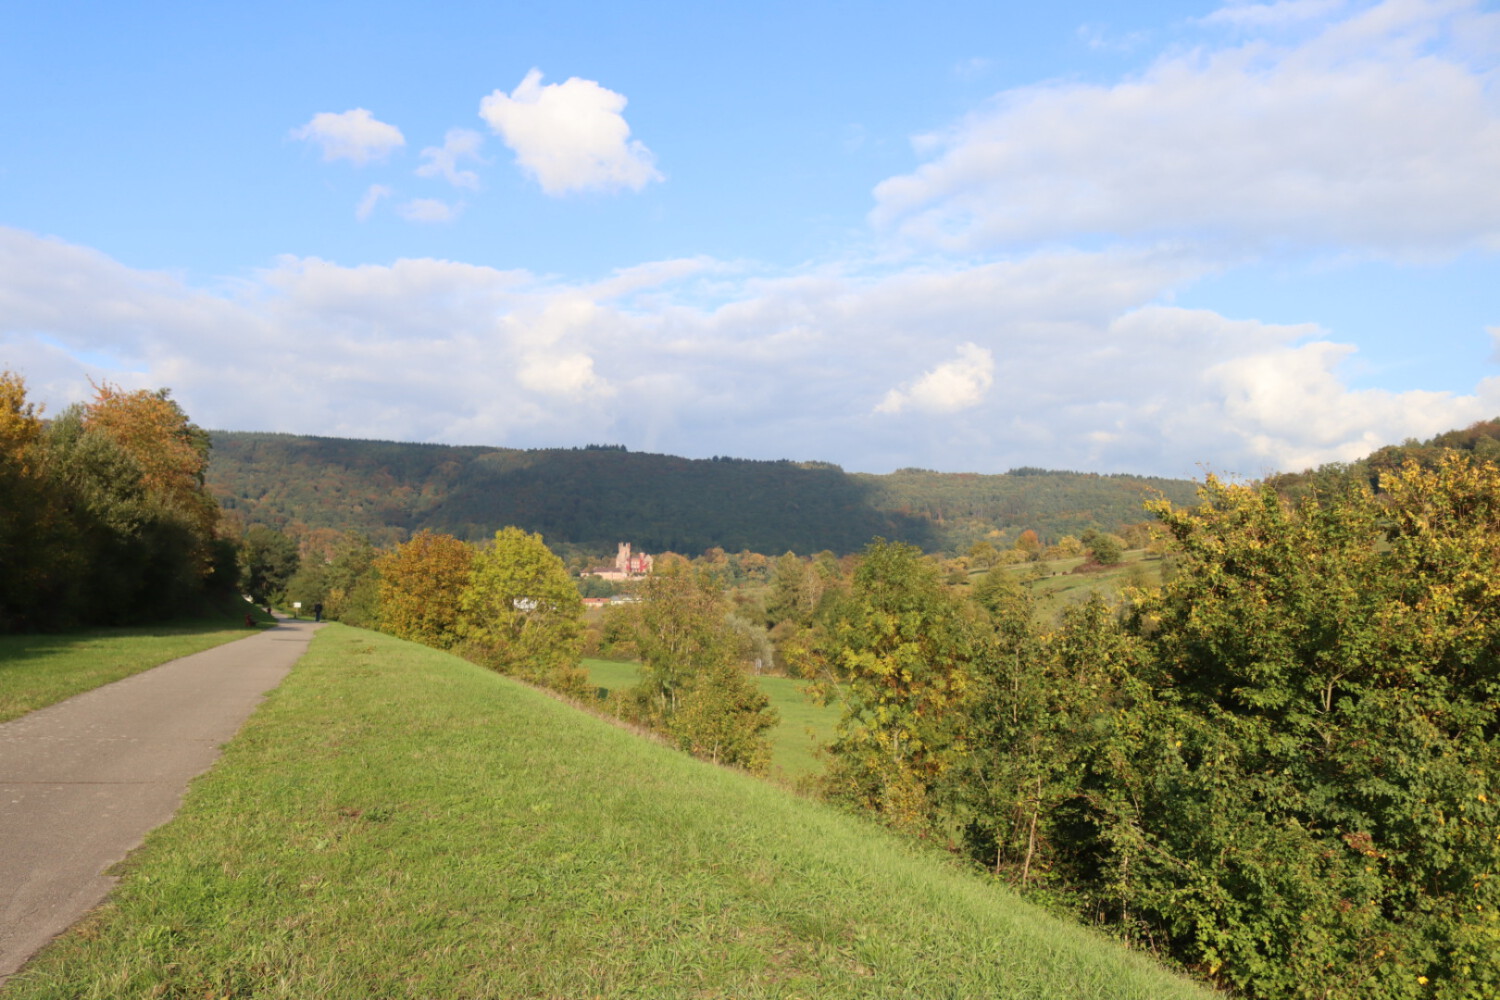 View on Neckarsteinach with castle.